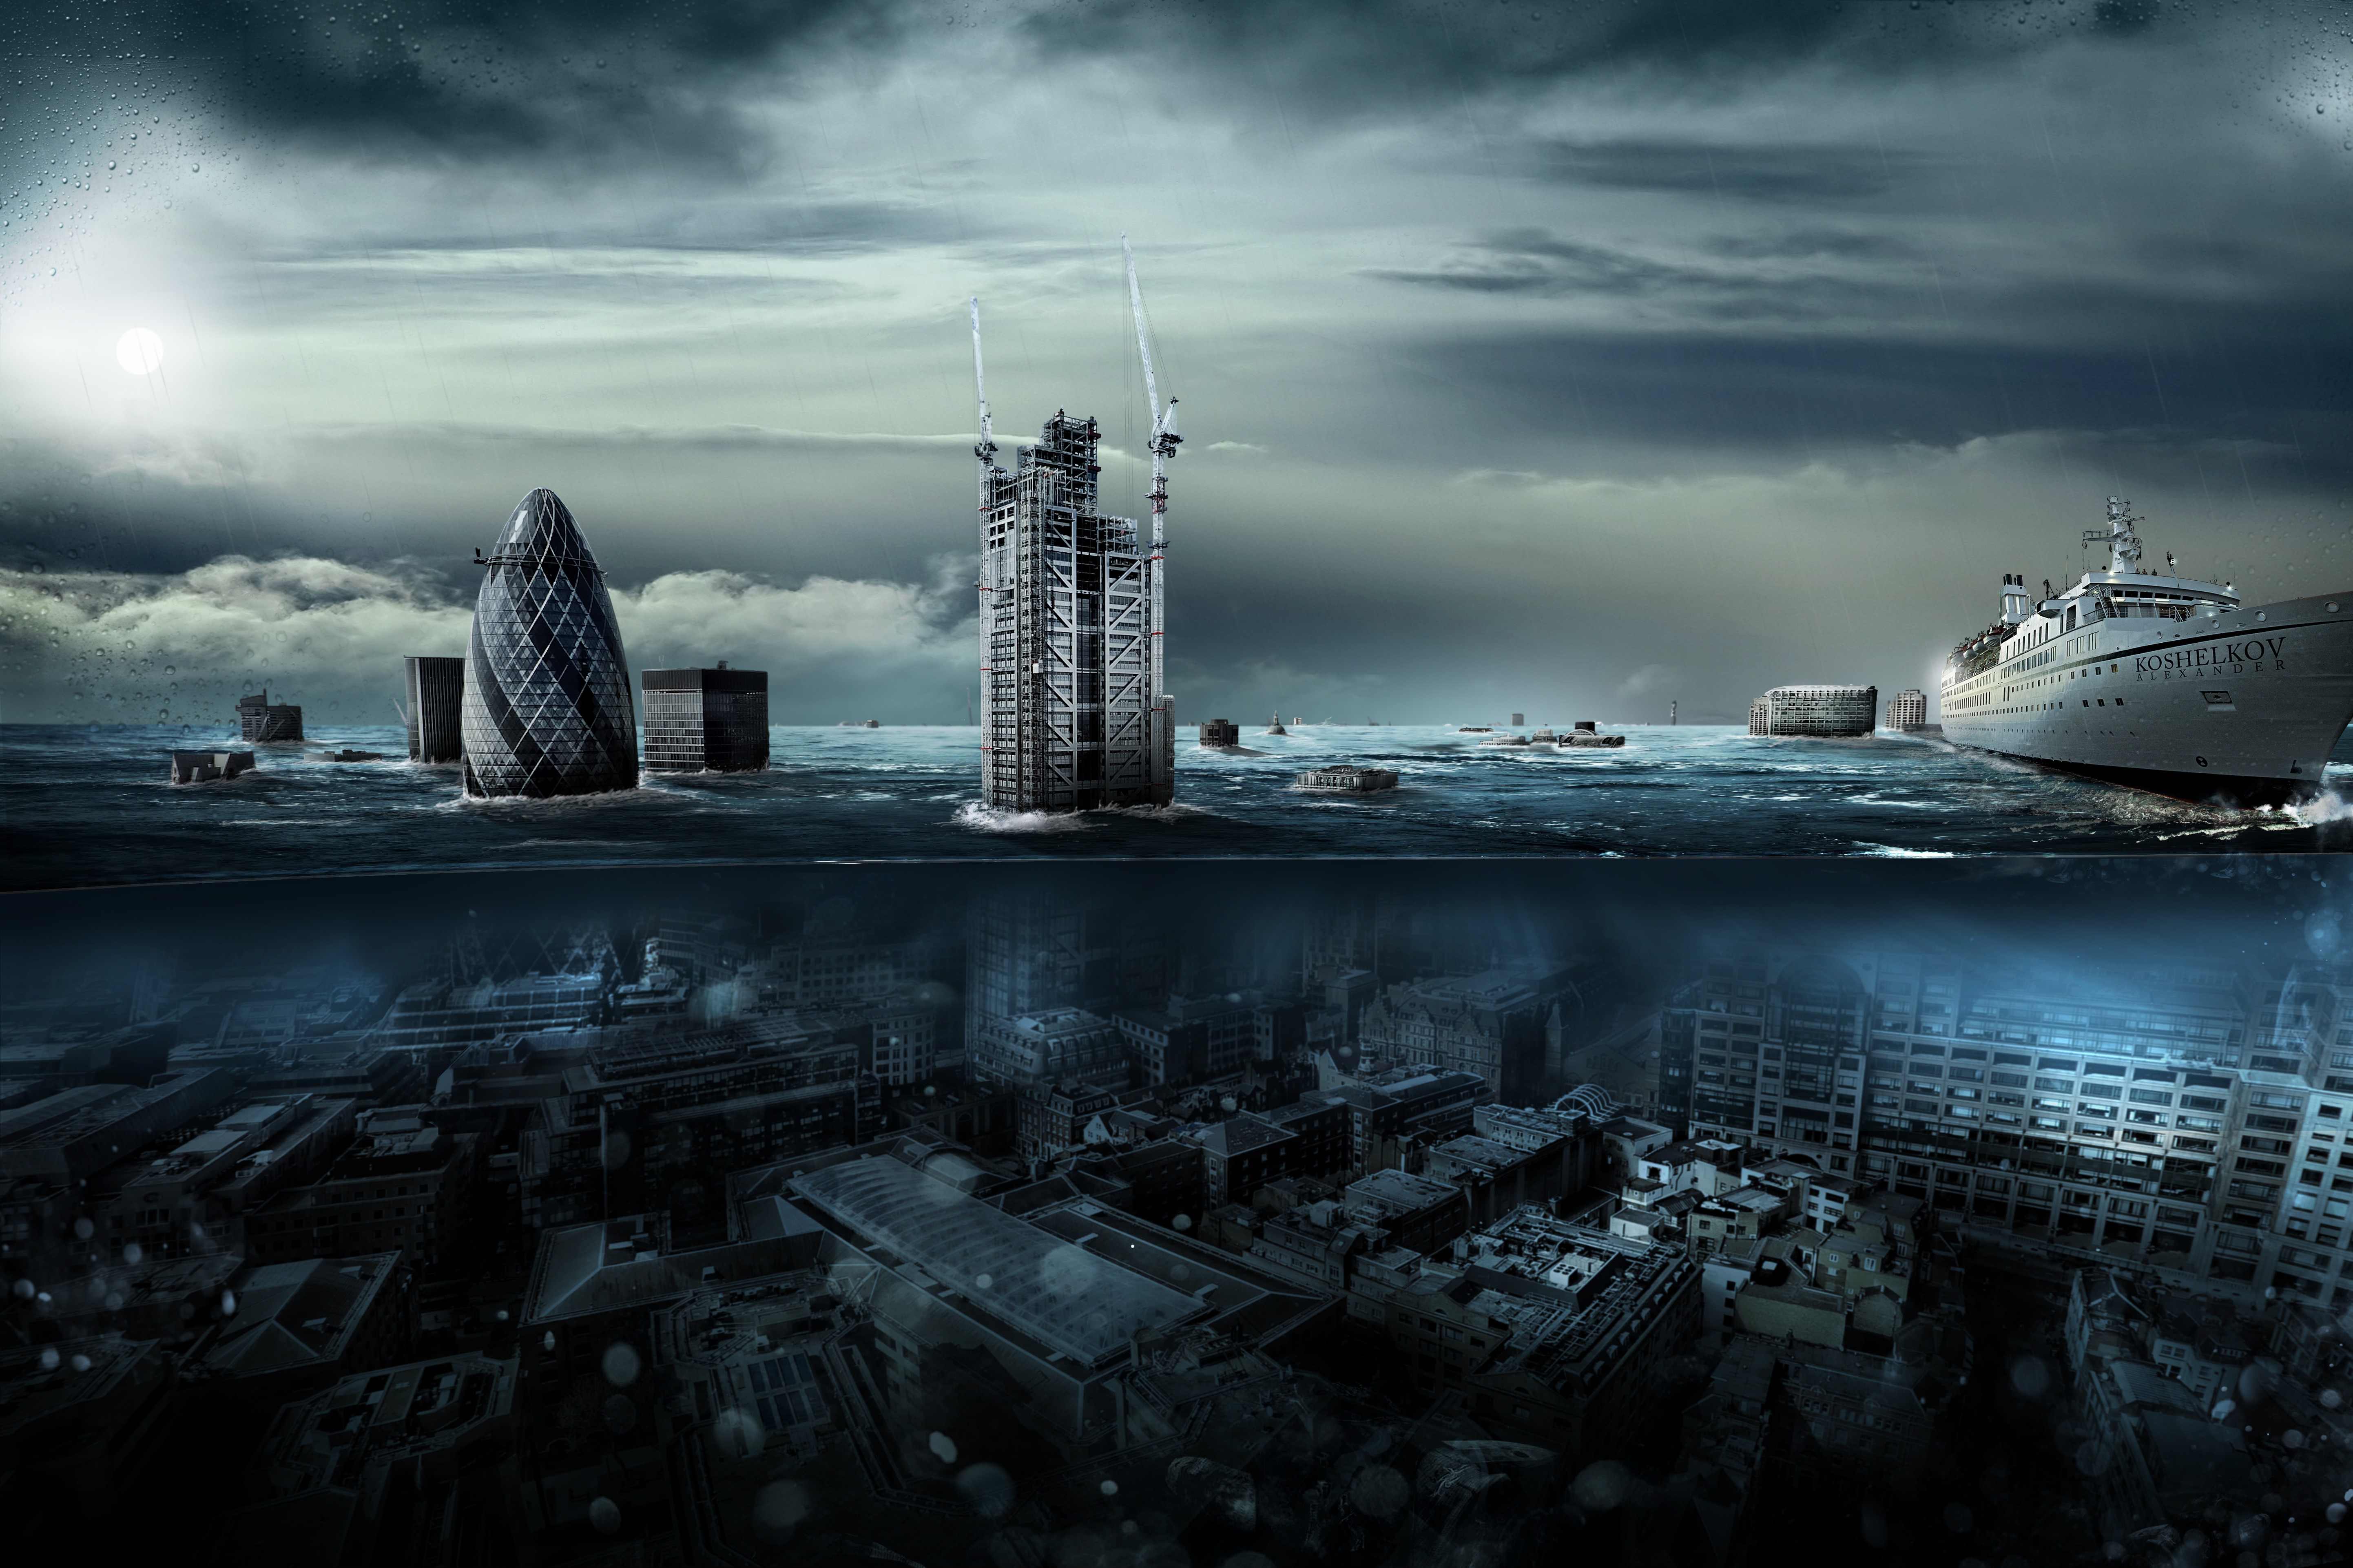 Alexander Koshelkov, Artwork, Apocalyptic, Ruins, Boat, Building, Underwater, Water, Science fiction, London Wallpaper